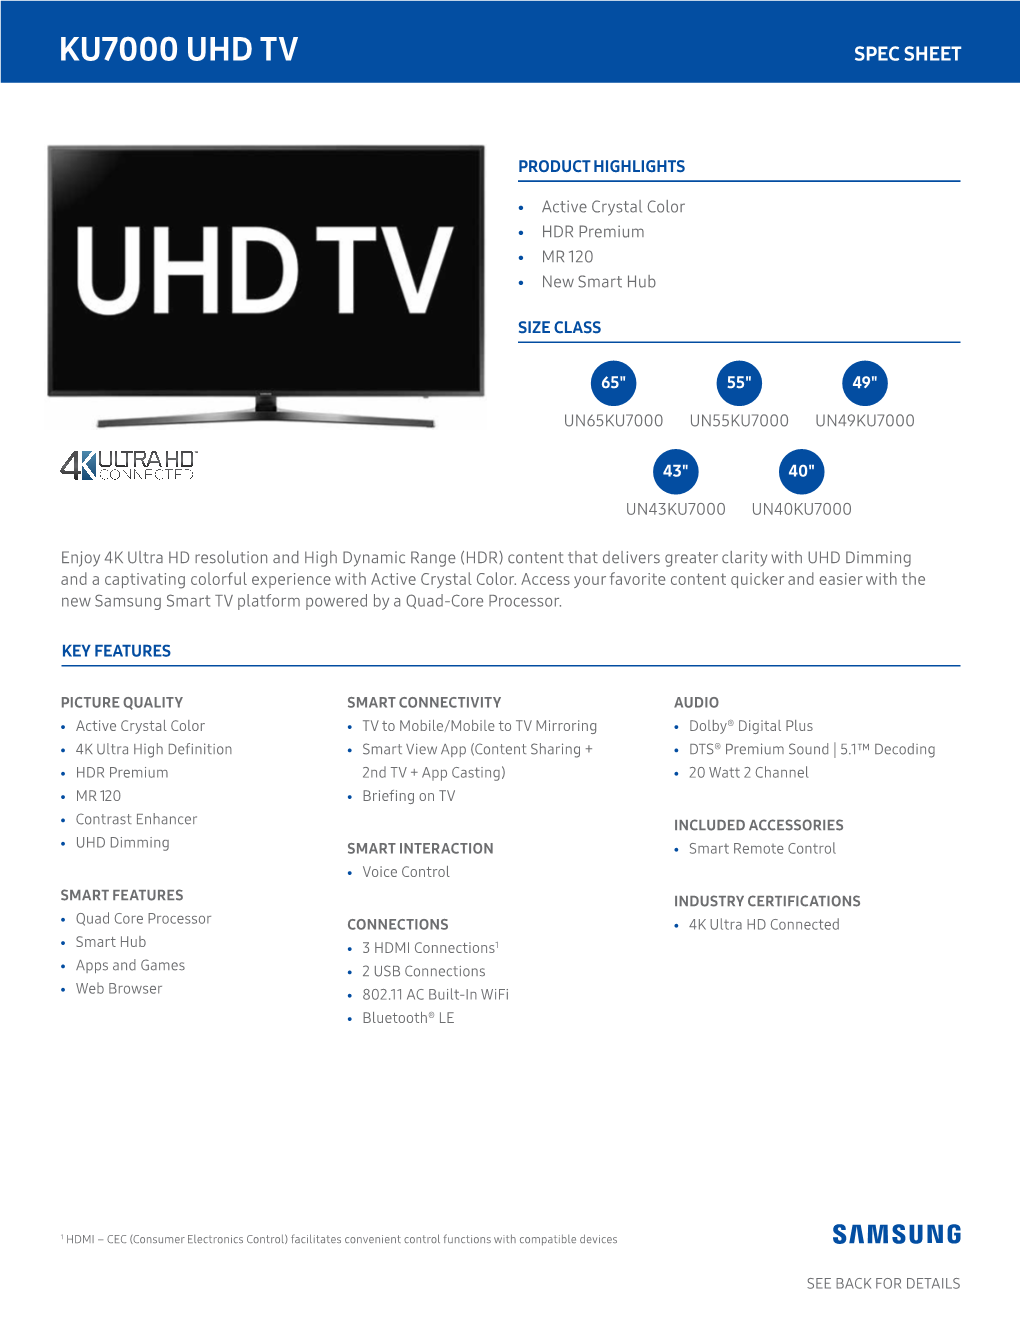 Samsung 49" 4K UHD LED Smart TV UN49KU7000 Specs